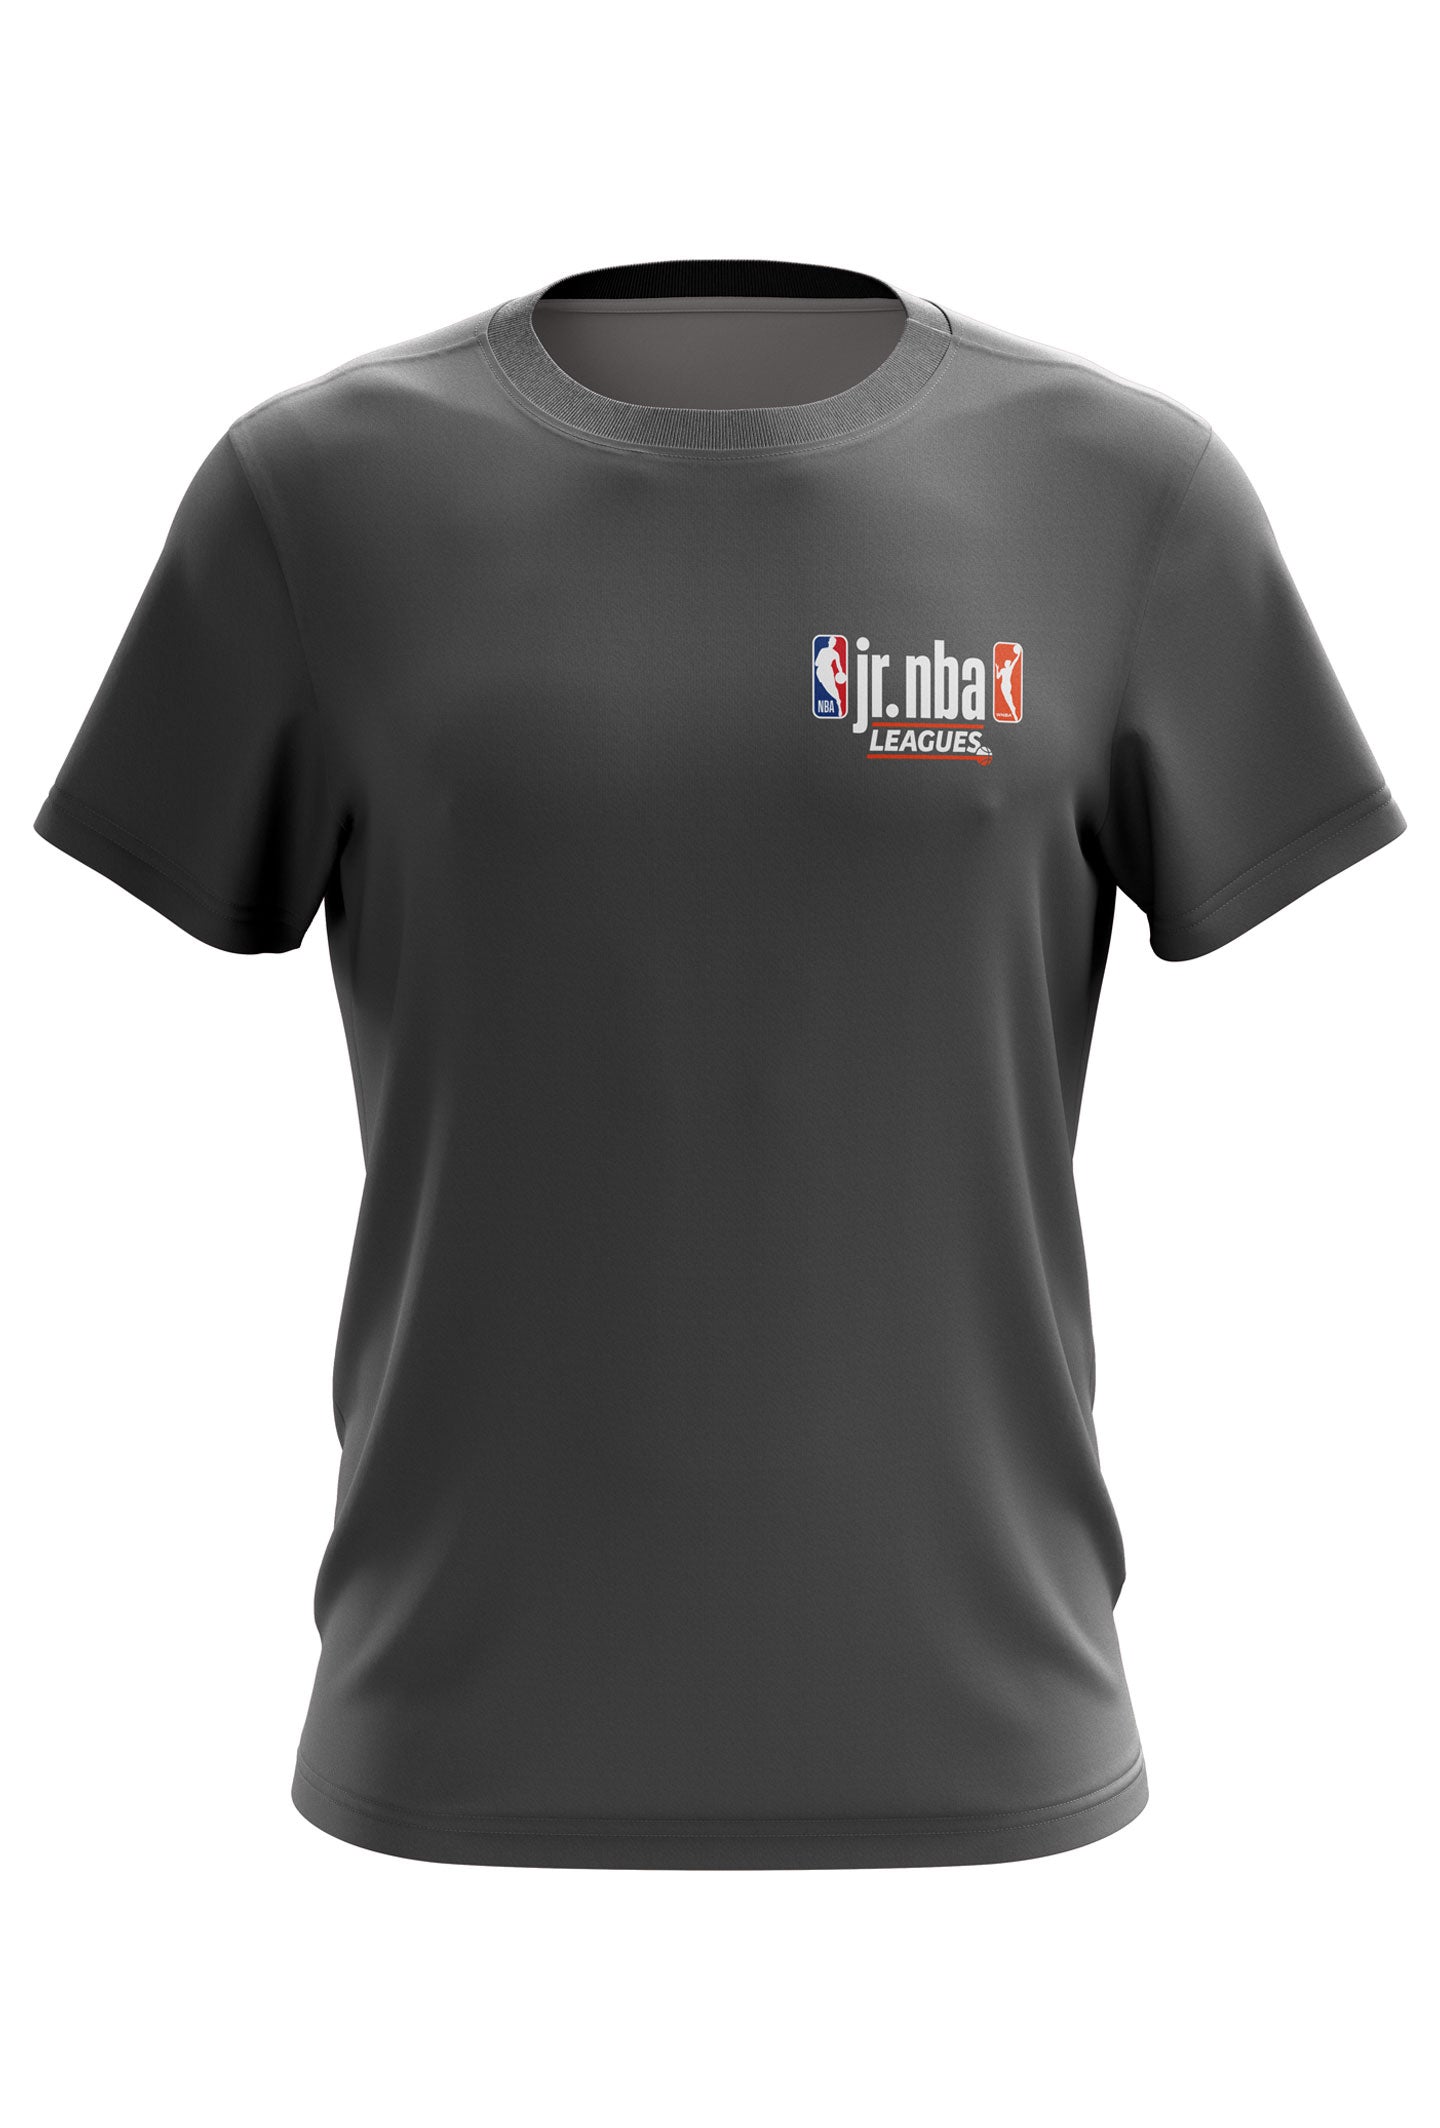 Jr. NBA Leagues Coach T Shirt